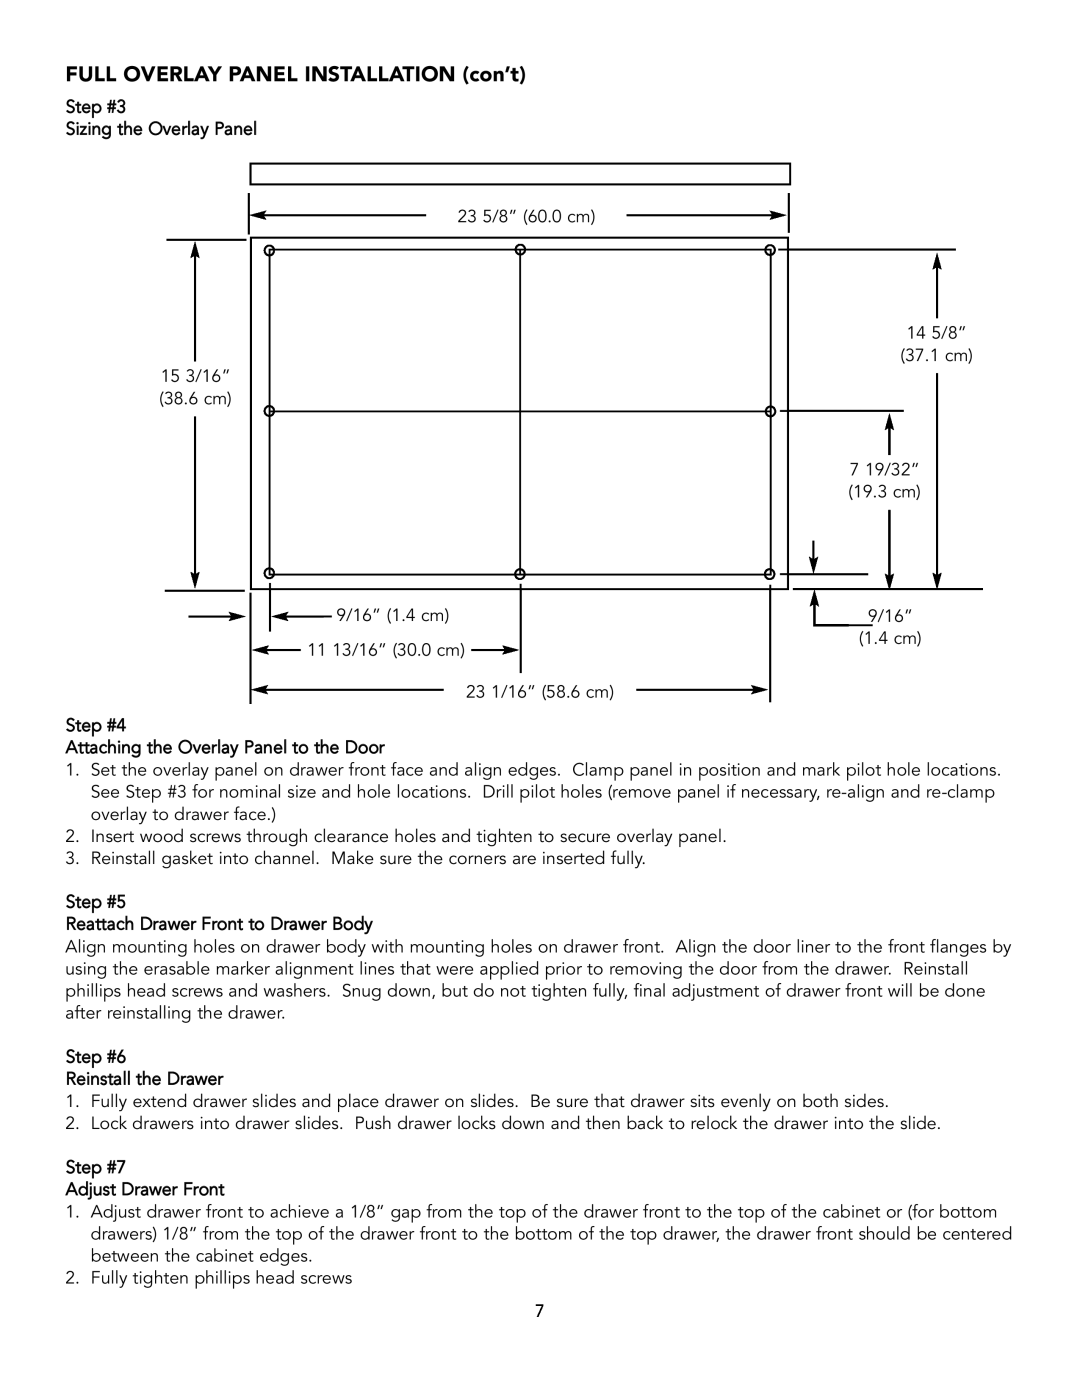 Viking Refrigerator Drawer manual FULL OVERLAY PANEL INSTALLATION con’t 